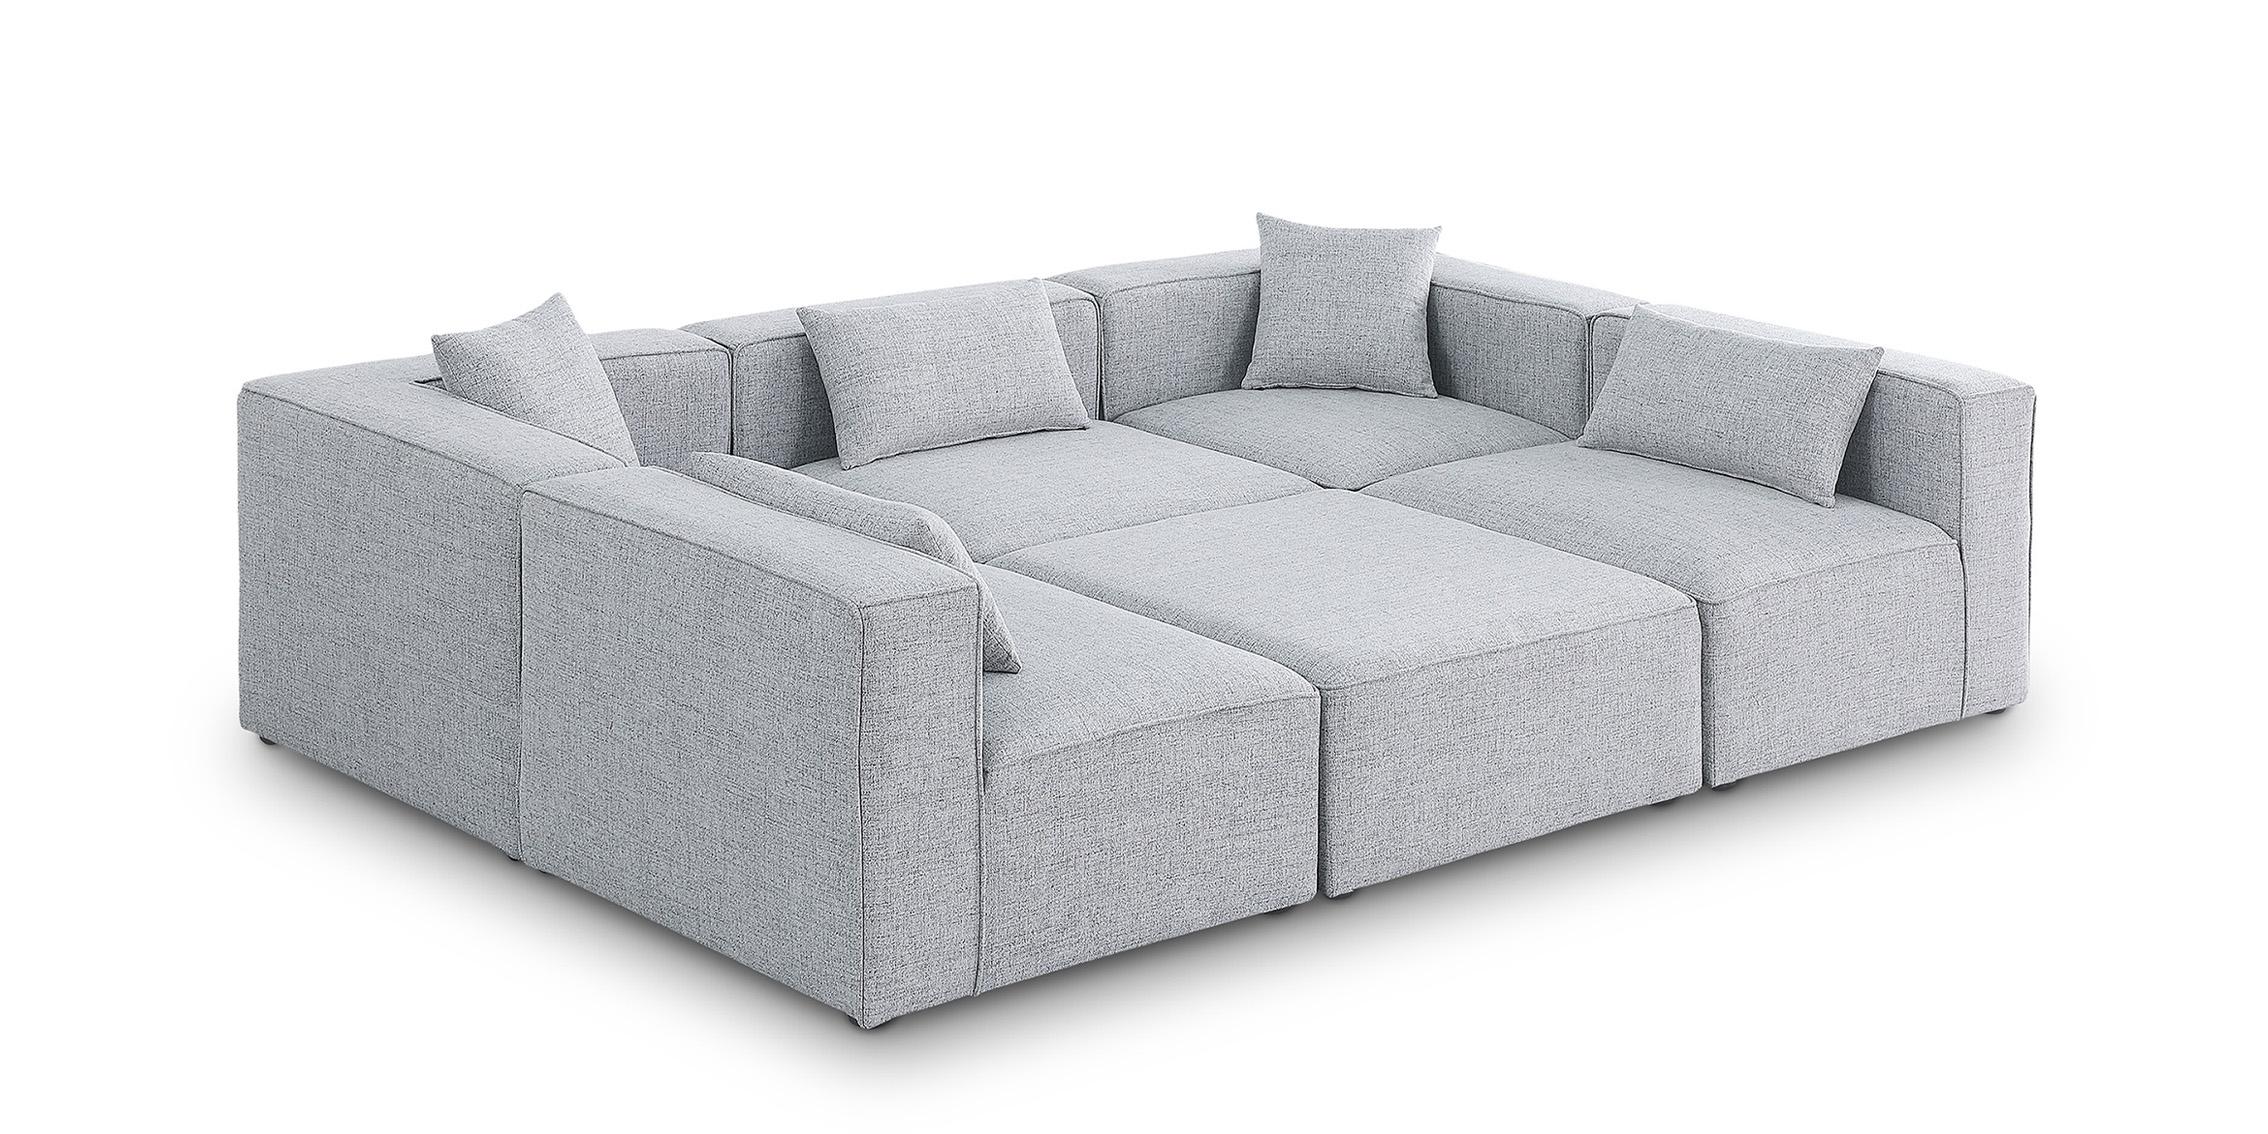 Contemporary, Modern Modular Sectional Sofa CUBE 630Grey-Sec6C 630Grey-Sec6C in Gray Linen